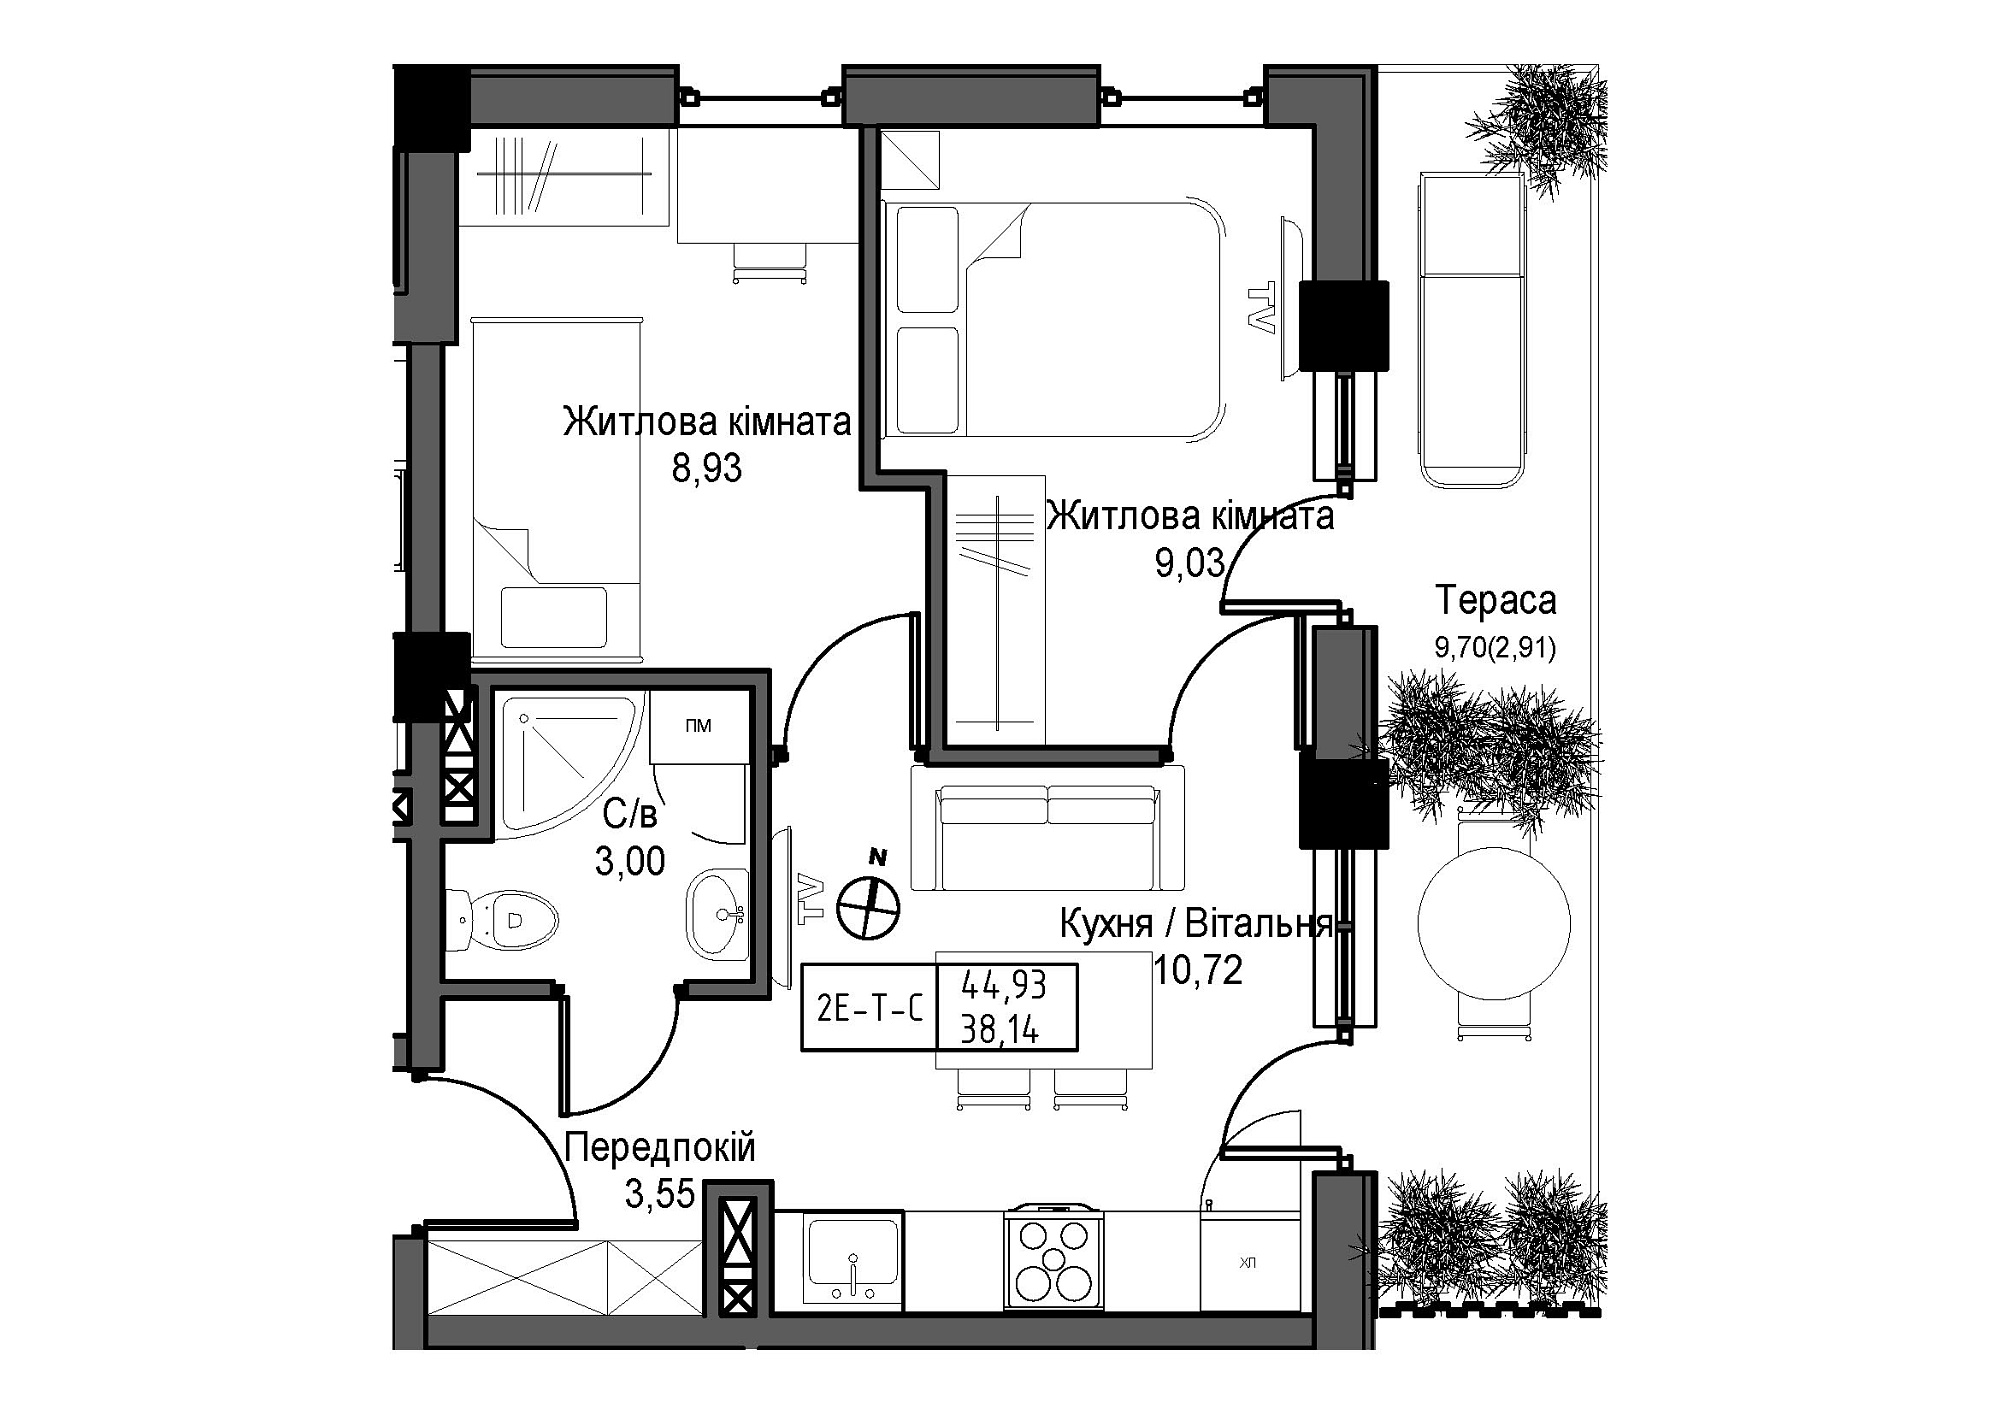 Планування 2-к квартира площею 38.14м2, UM-007-04/0003.